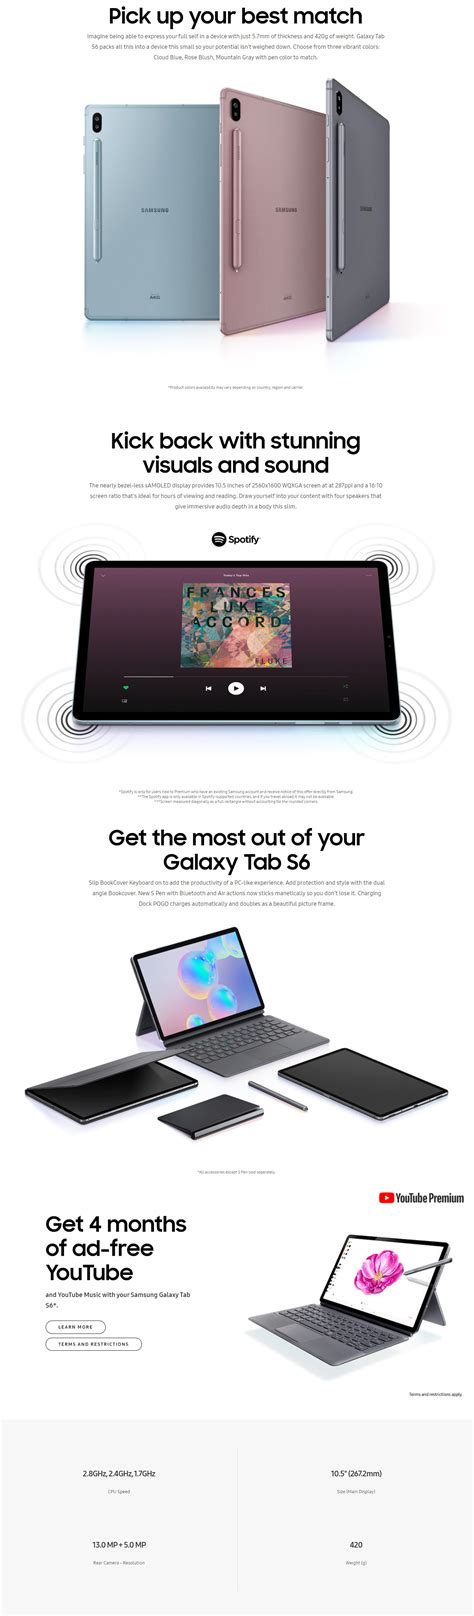 Care samsung my galaxy india. Samsung Galaxy Tab S6 10.5 2019 Tablet (T865) - Original 1 ...